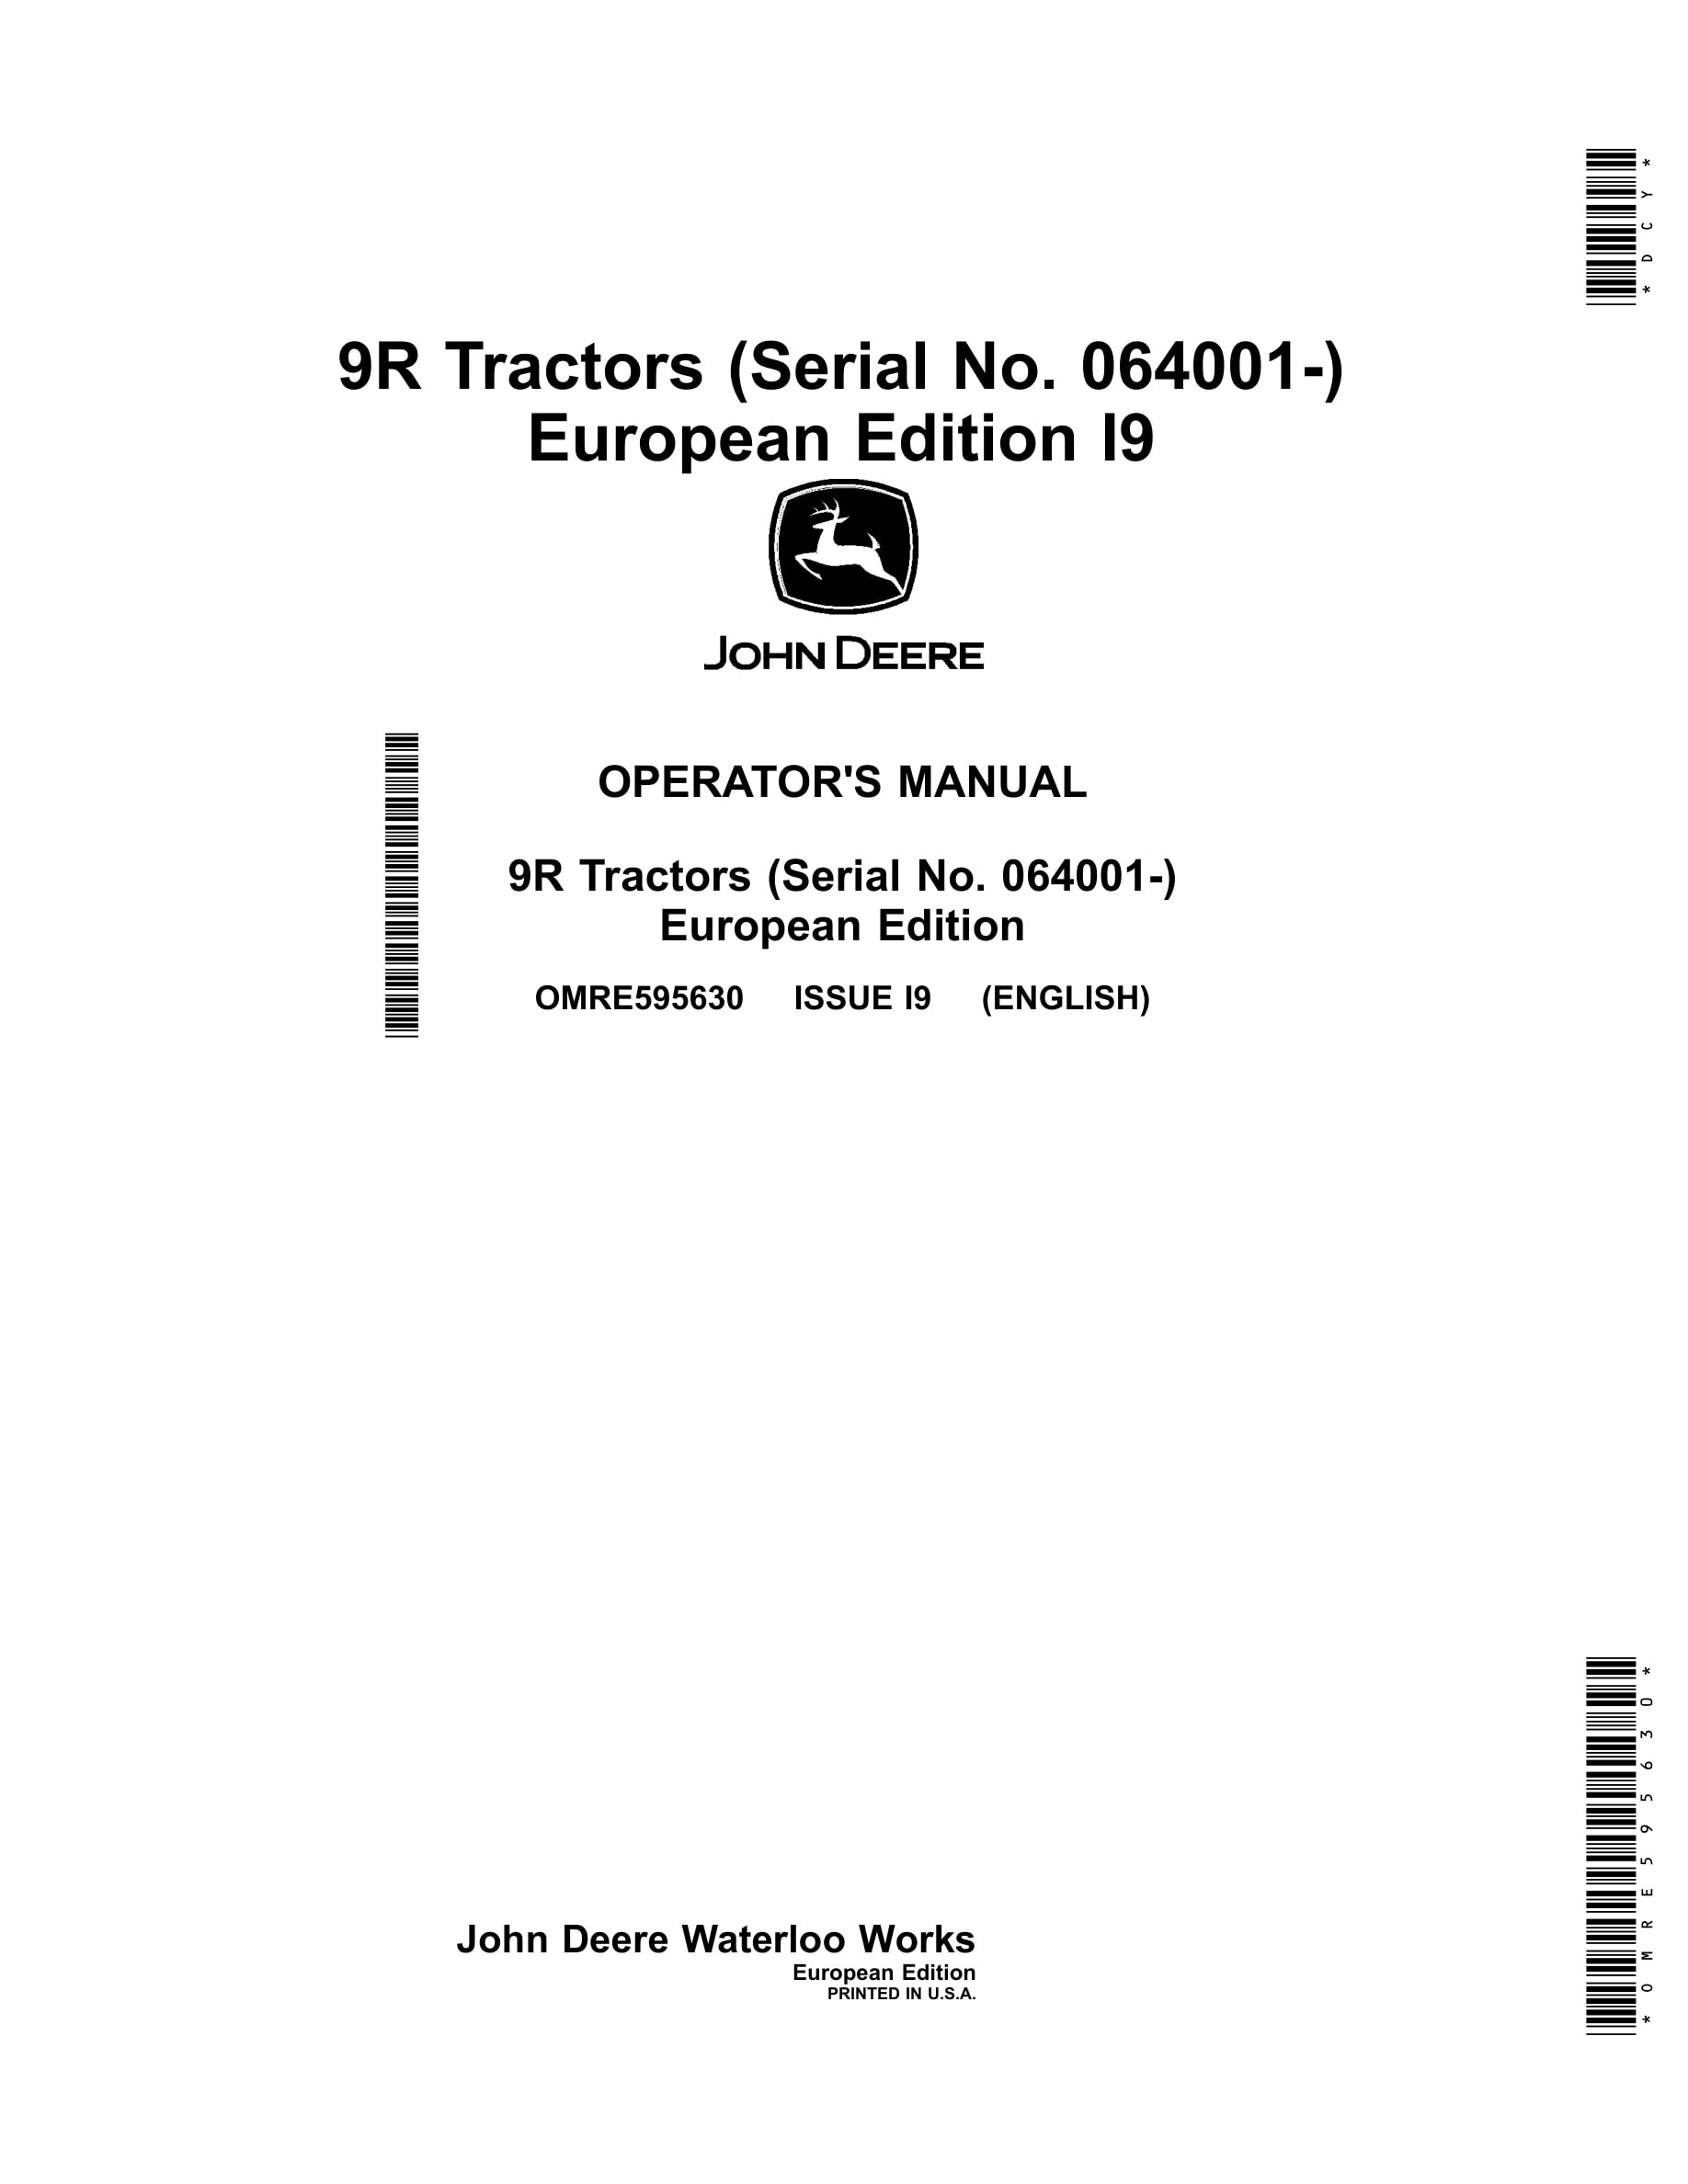 John Deere 9r Tractors Operator Manuals OMRE595630-1